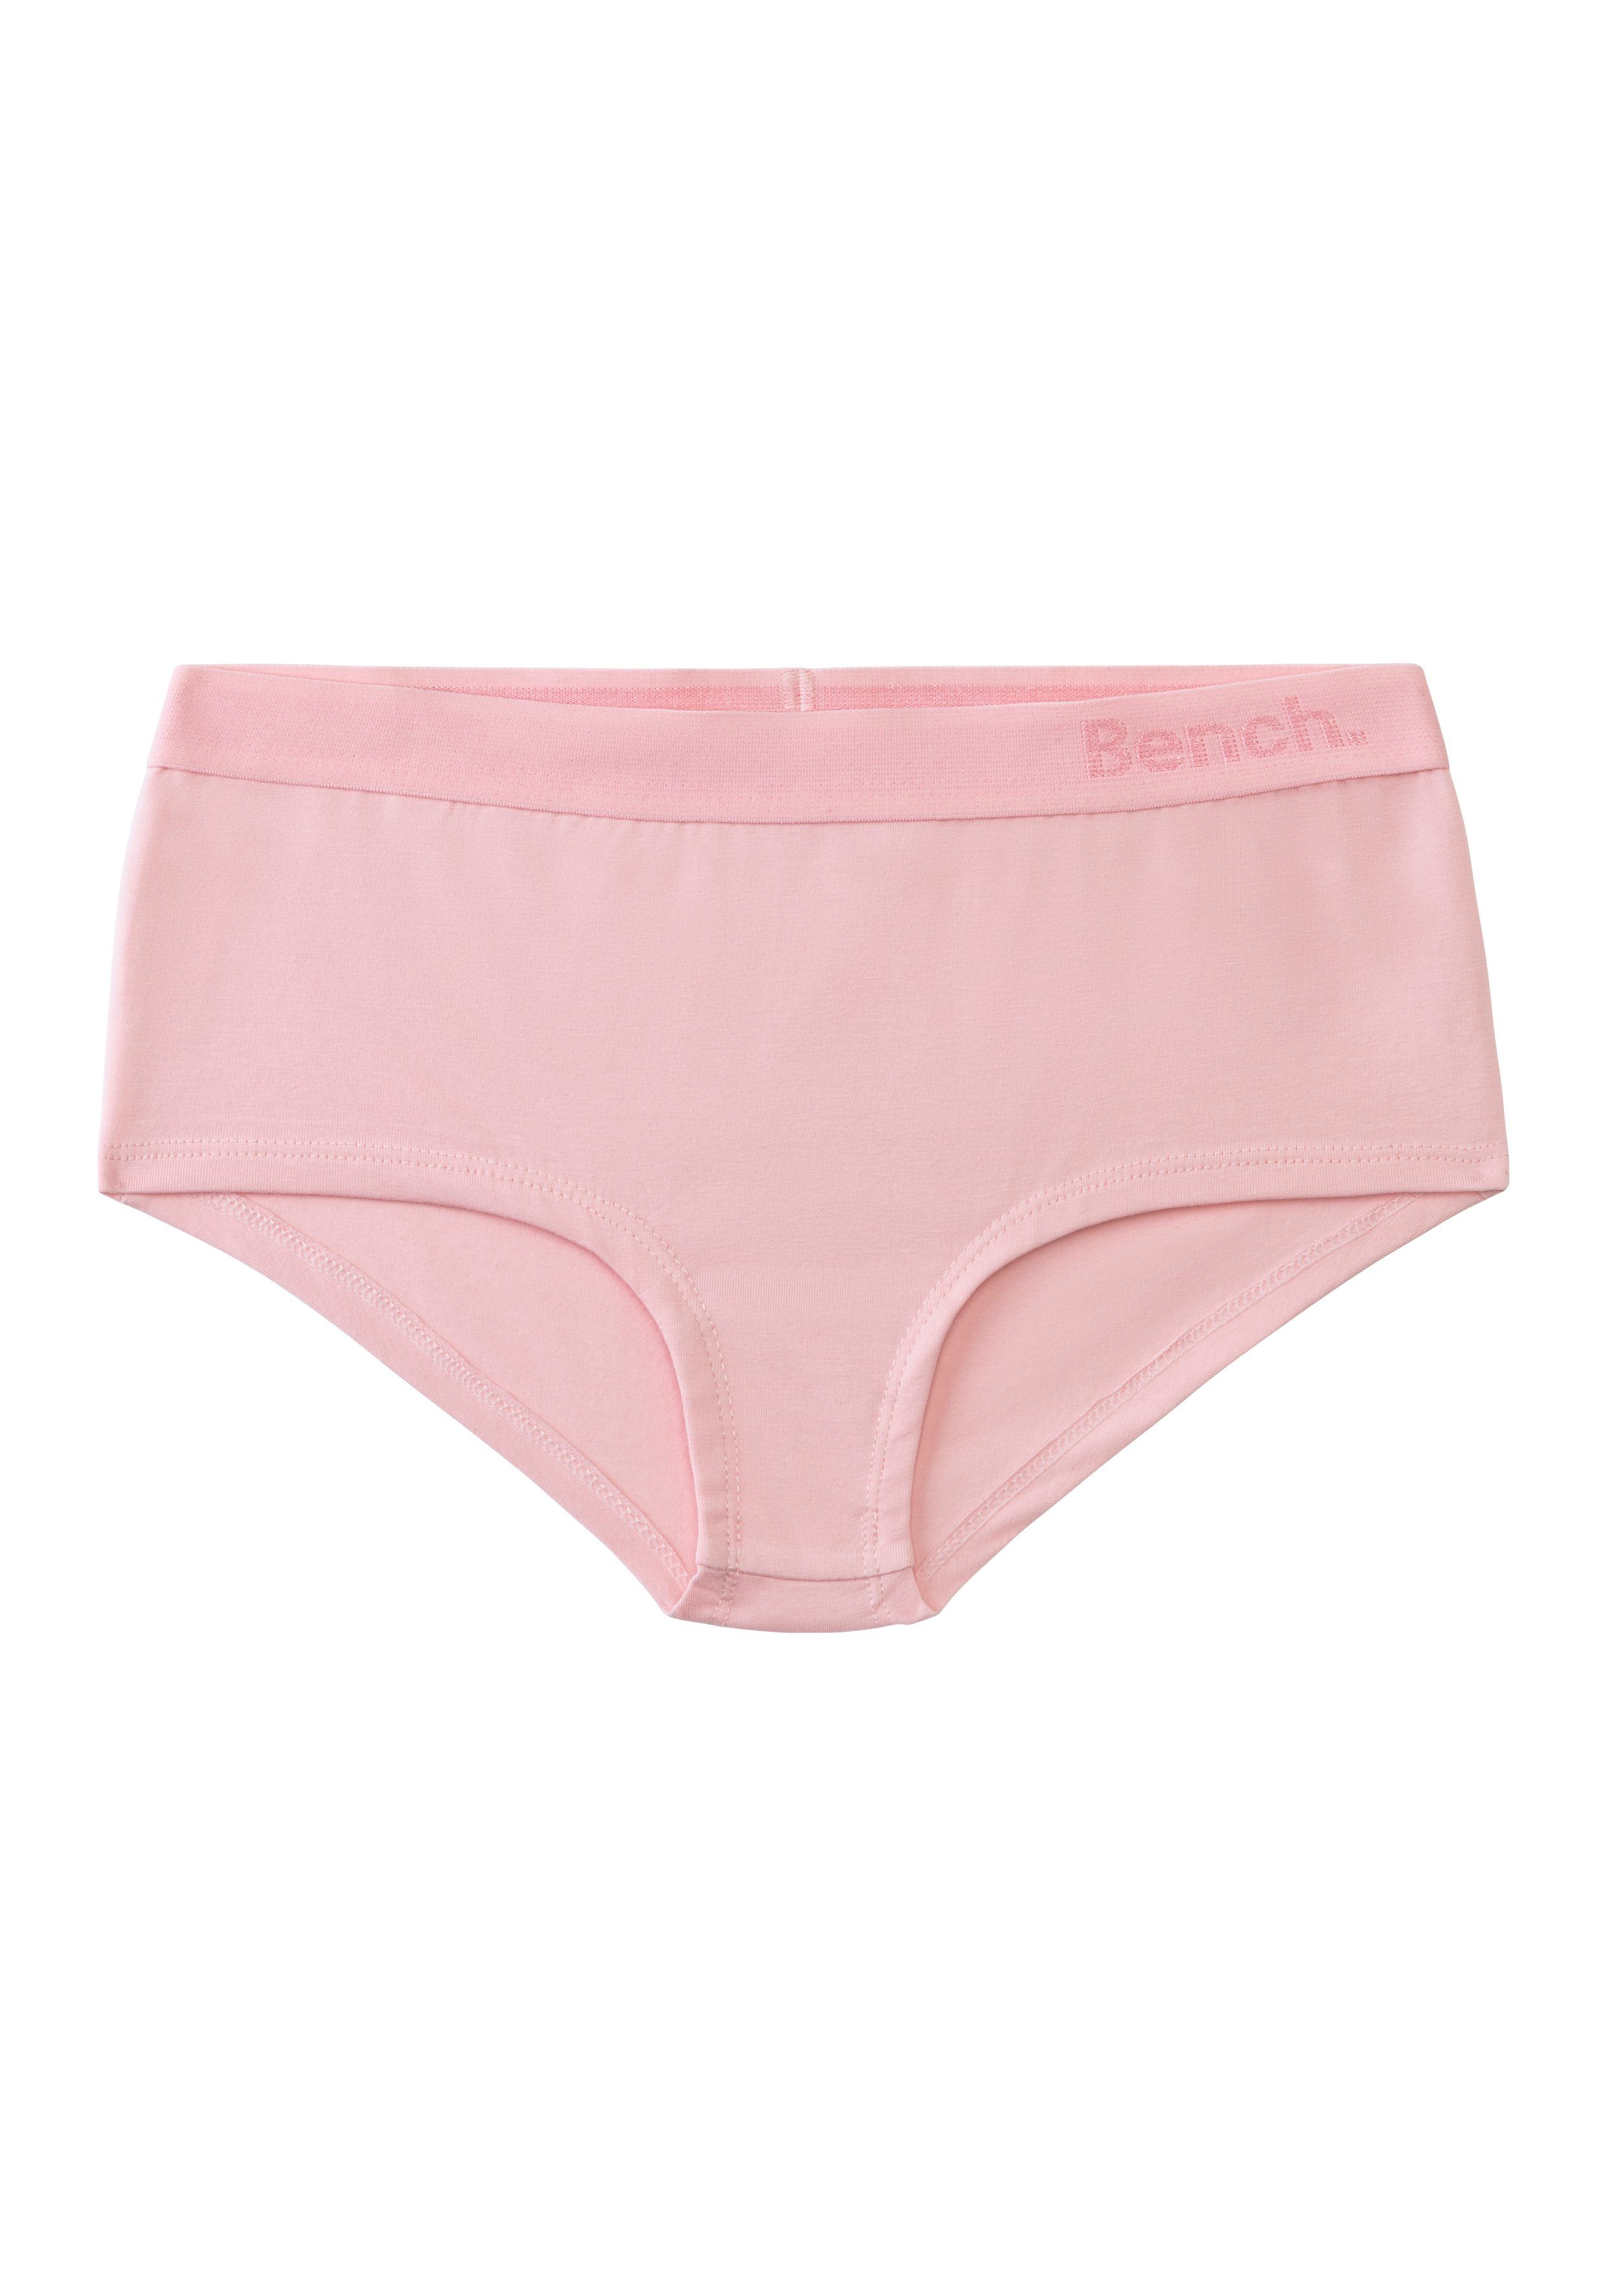 Bustier Set: Panty) rosa mit Bench. (4-tlg., mit tonigem Zebramuster